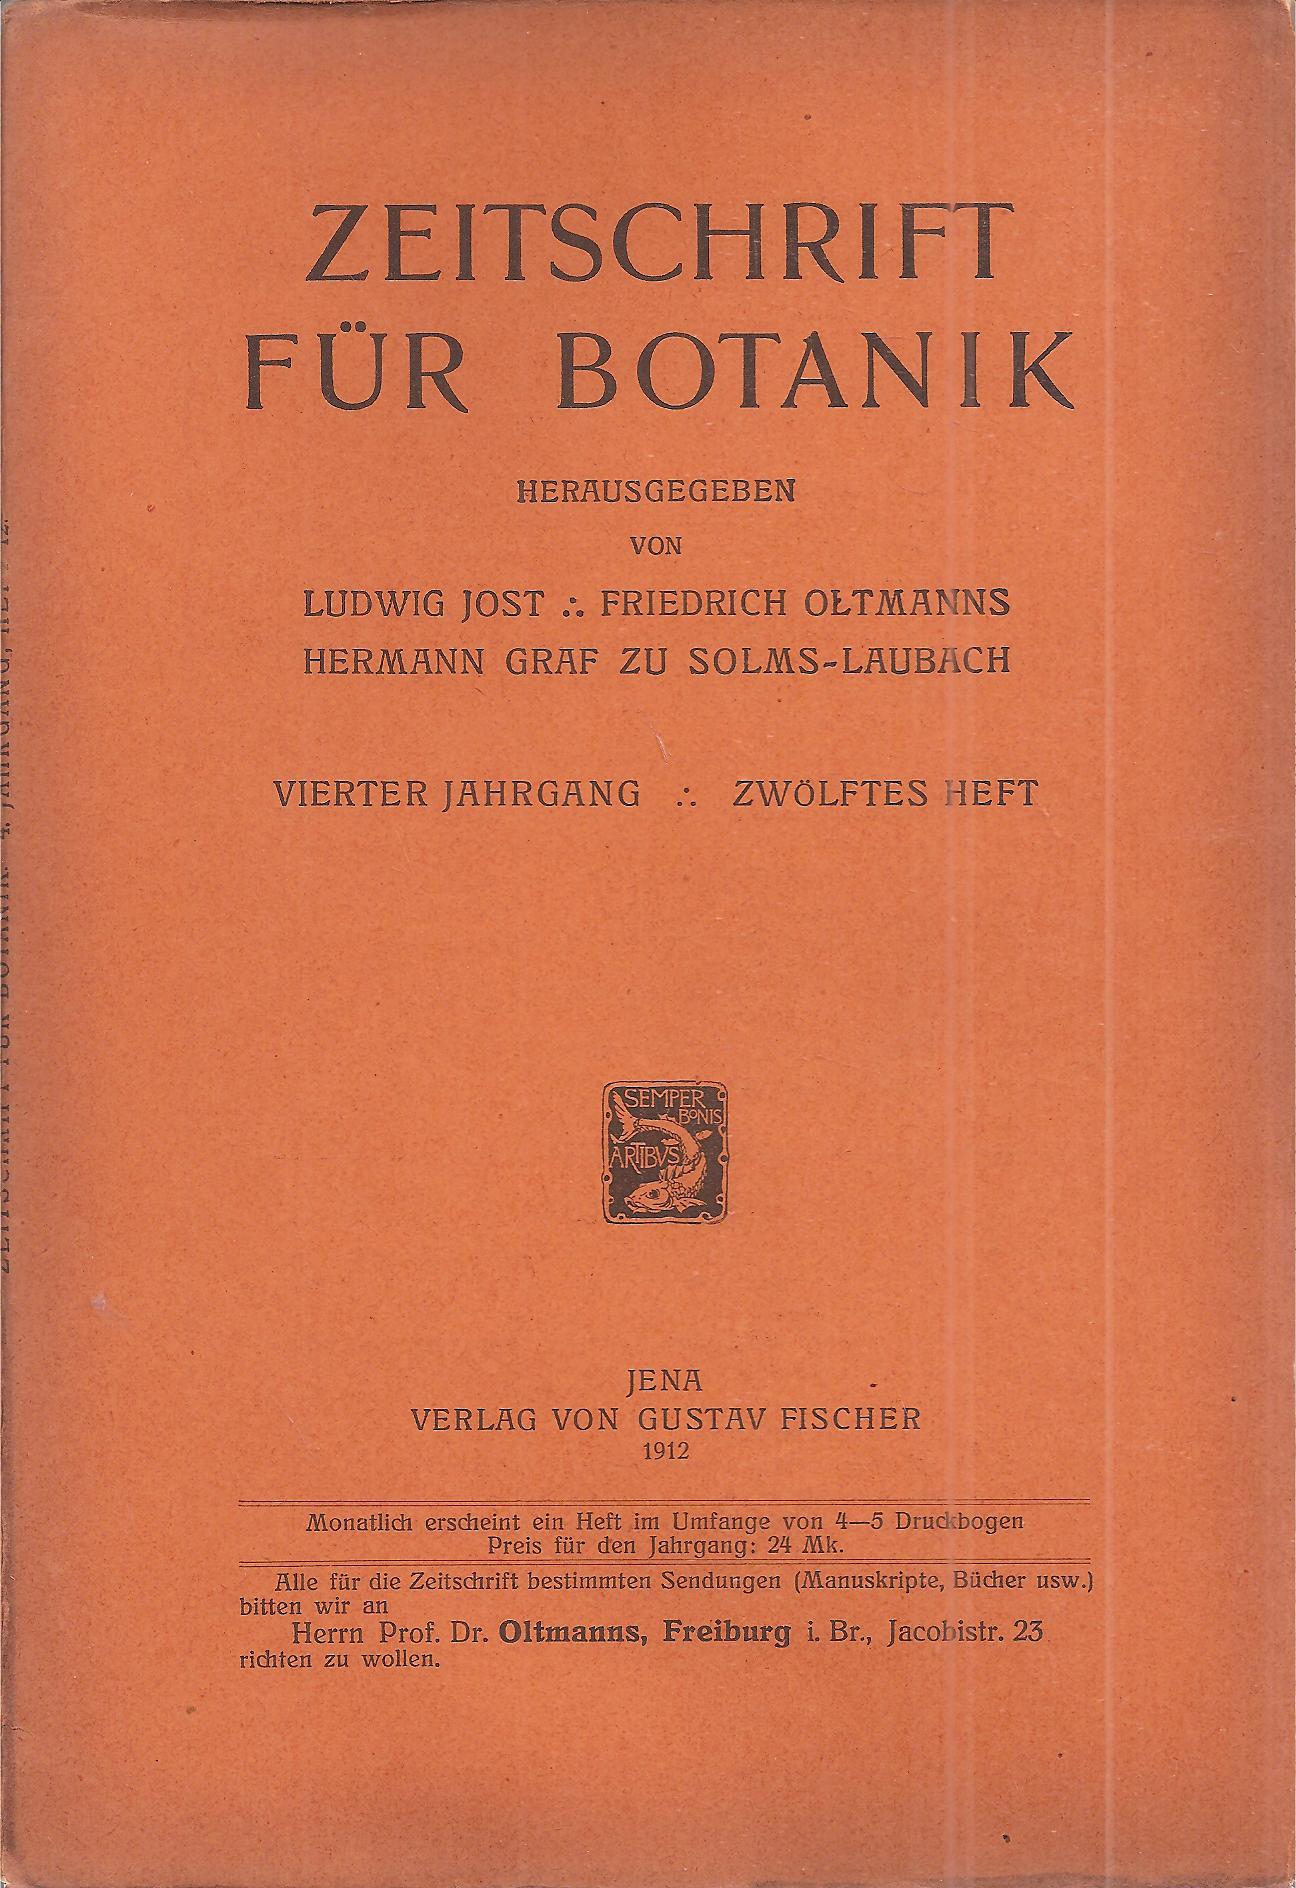 Zeitschrift für Botanik  Zeitschrift für Botanik 4.Jahrgang 1912, Zwölftes Heft - Register 